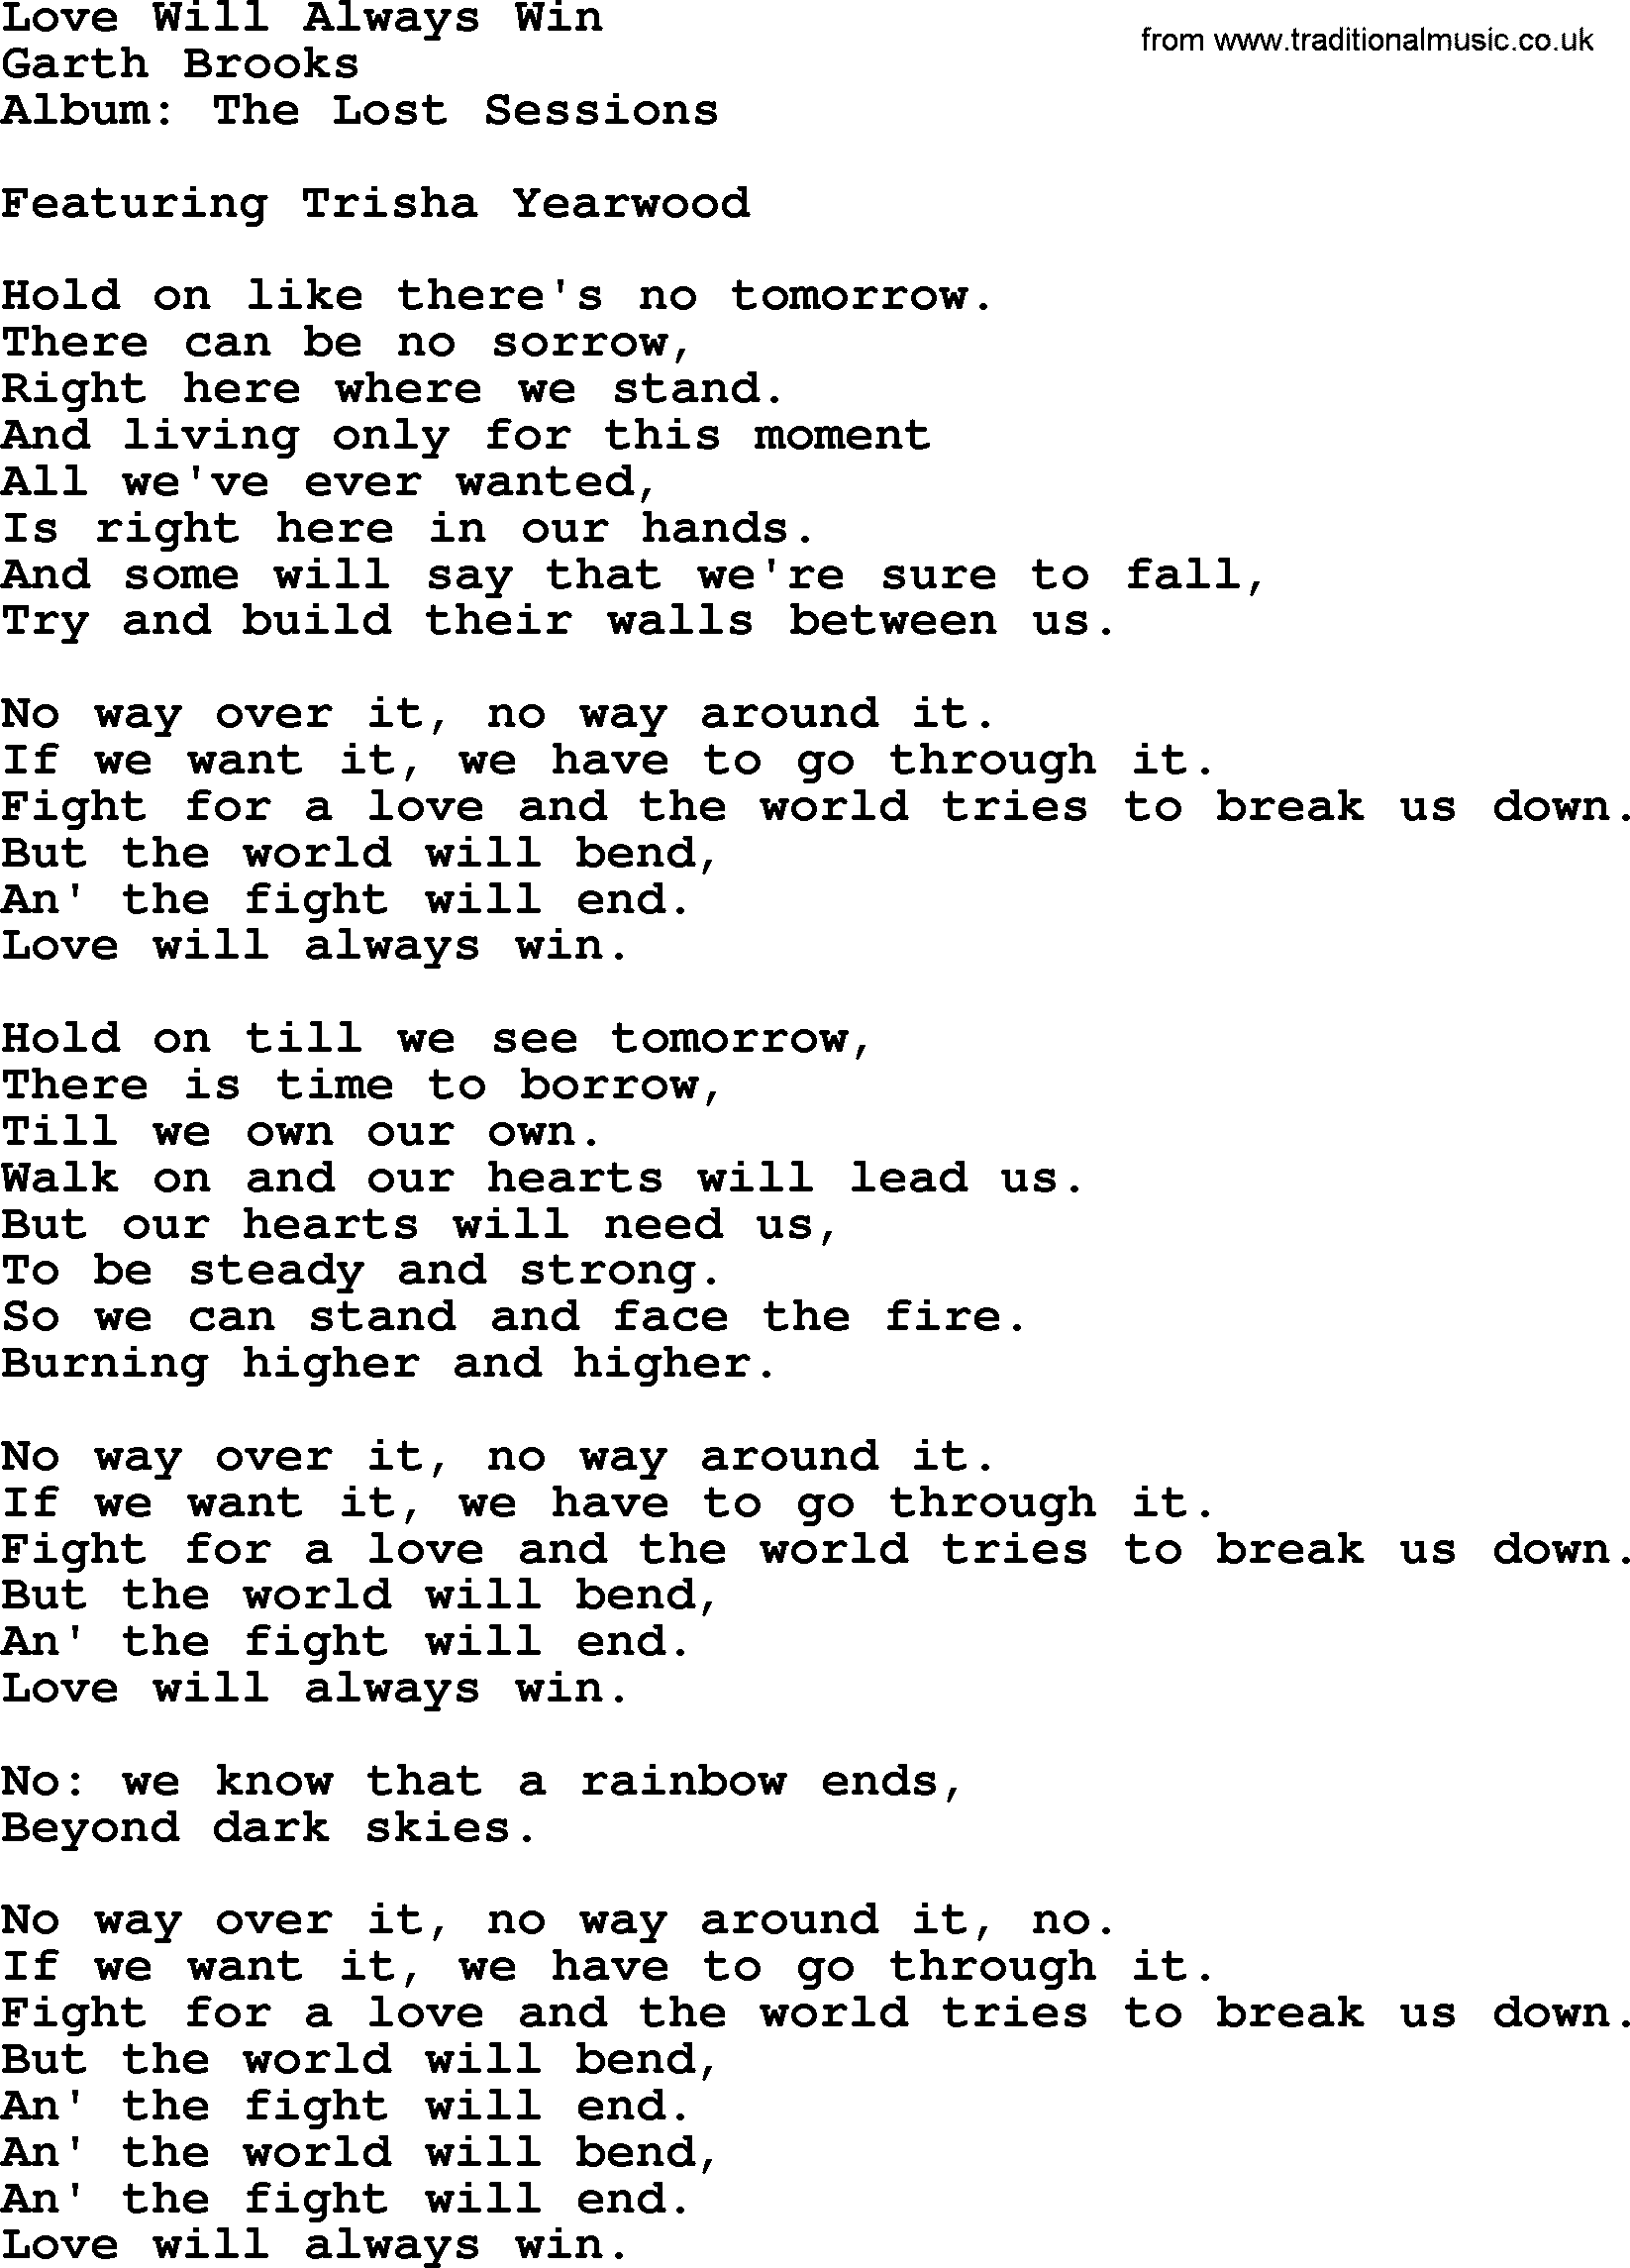 Garth Brooks song: Love Will Always Win, lyrics